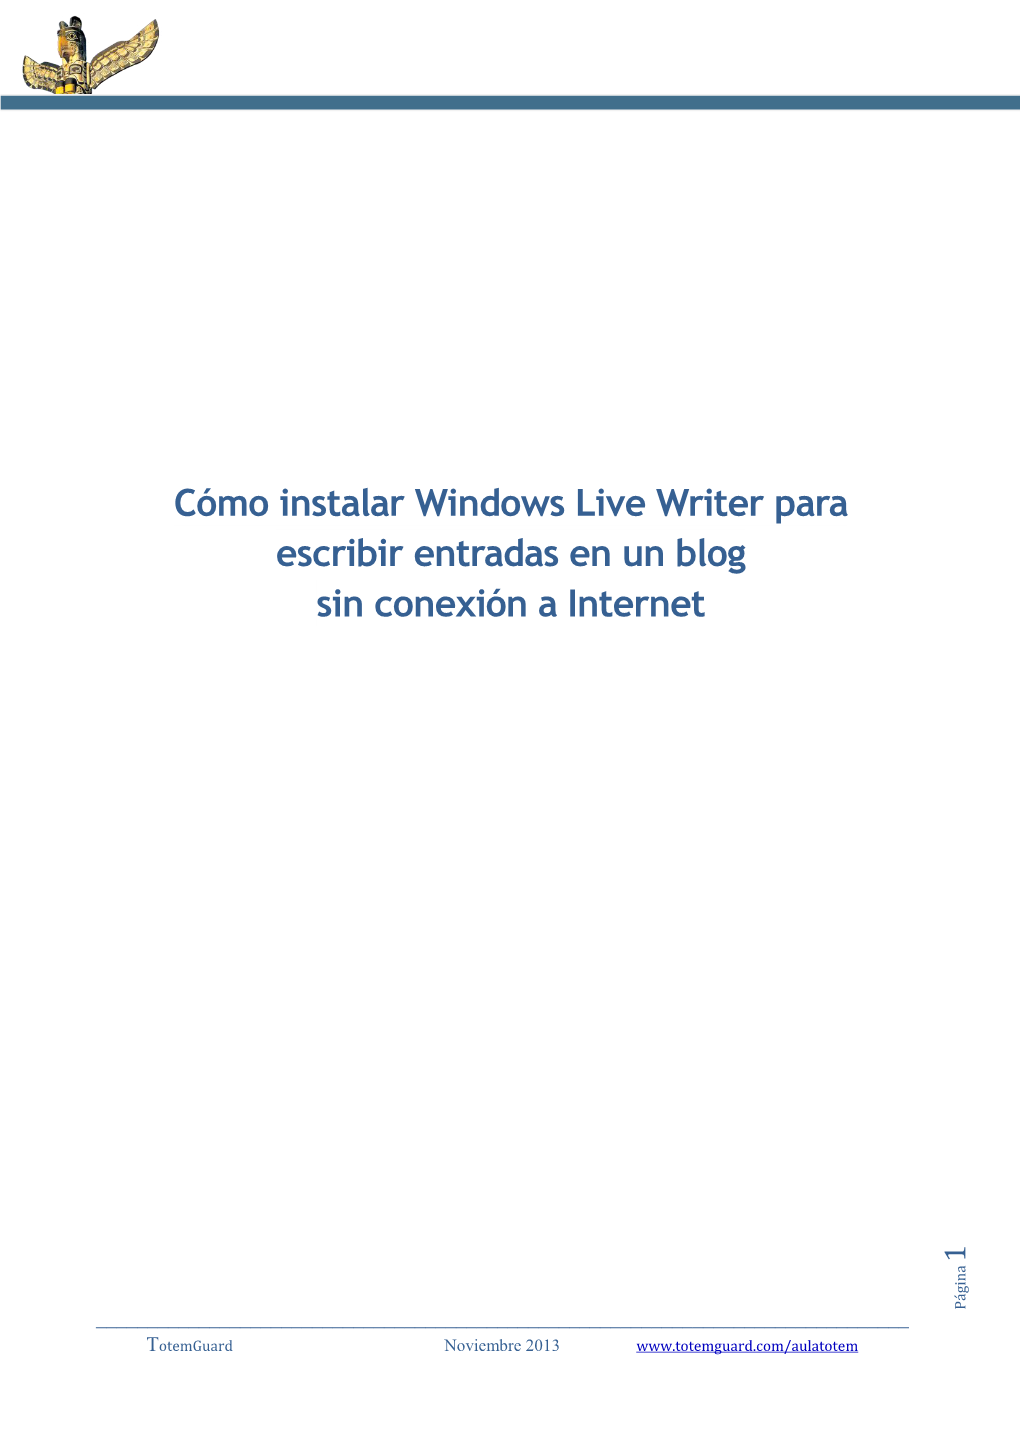 Cómo Instalar Windows Live Writer Para Escribir Entradas En Un Blog Sin Conexión a Internet